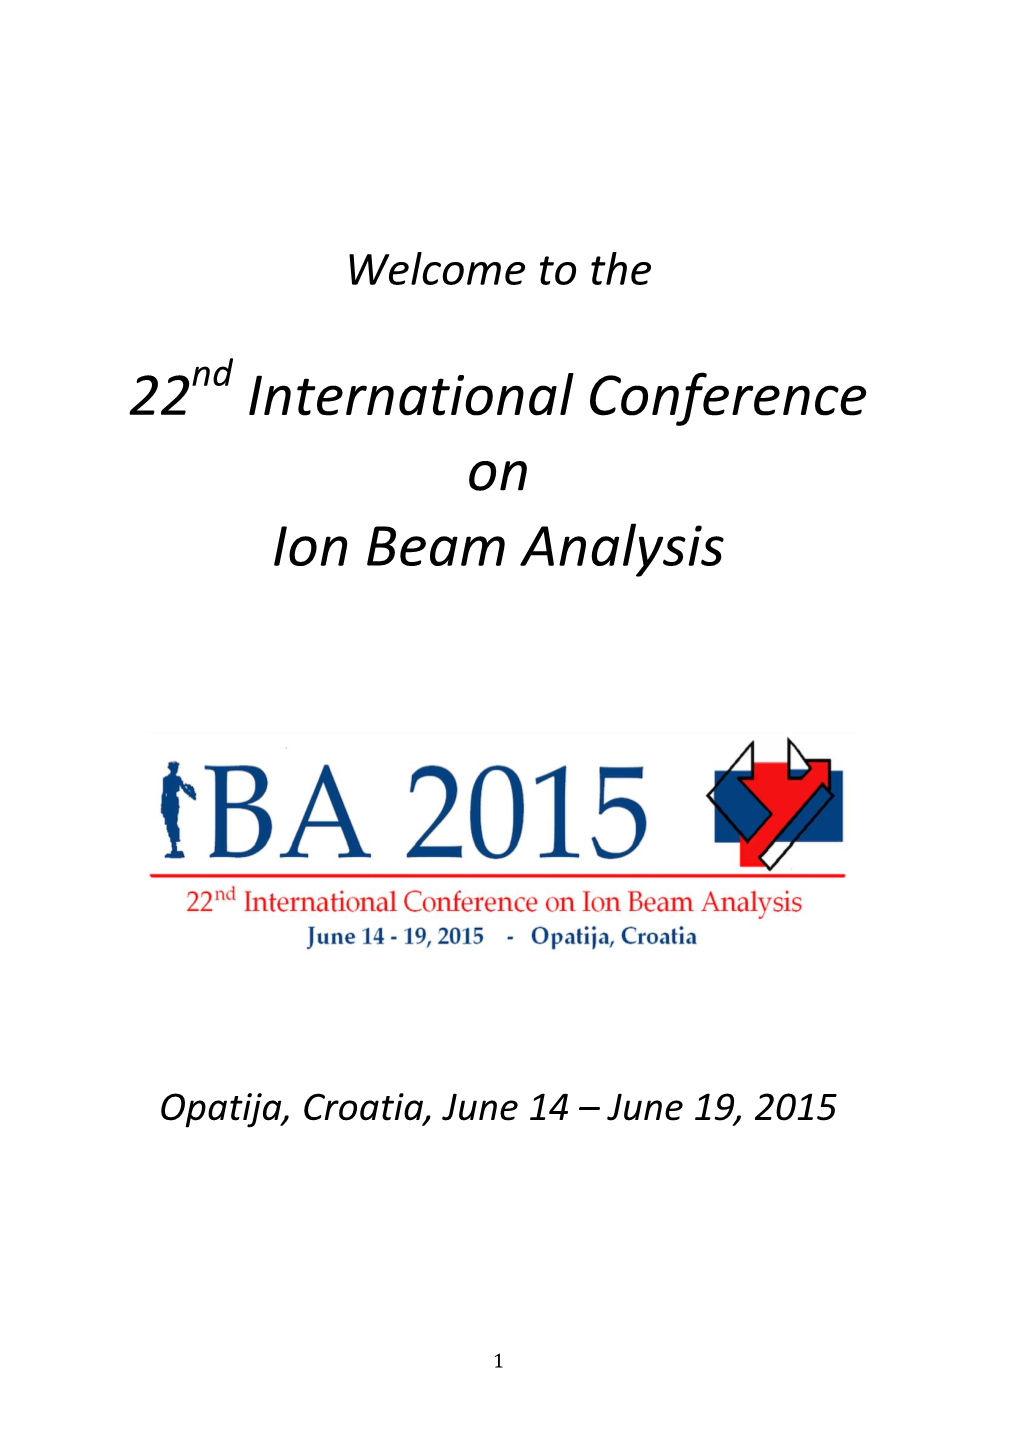 22 International Conference on Ion Beam Analysis